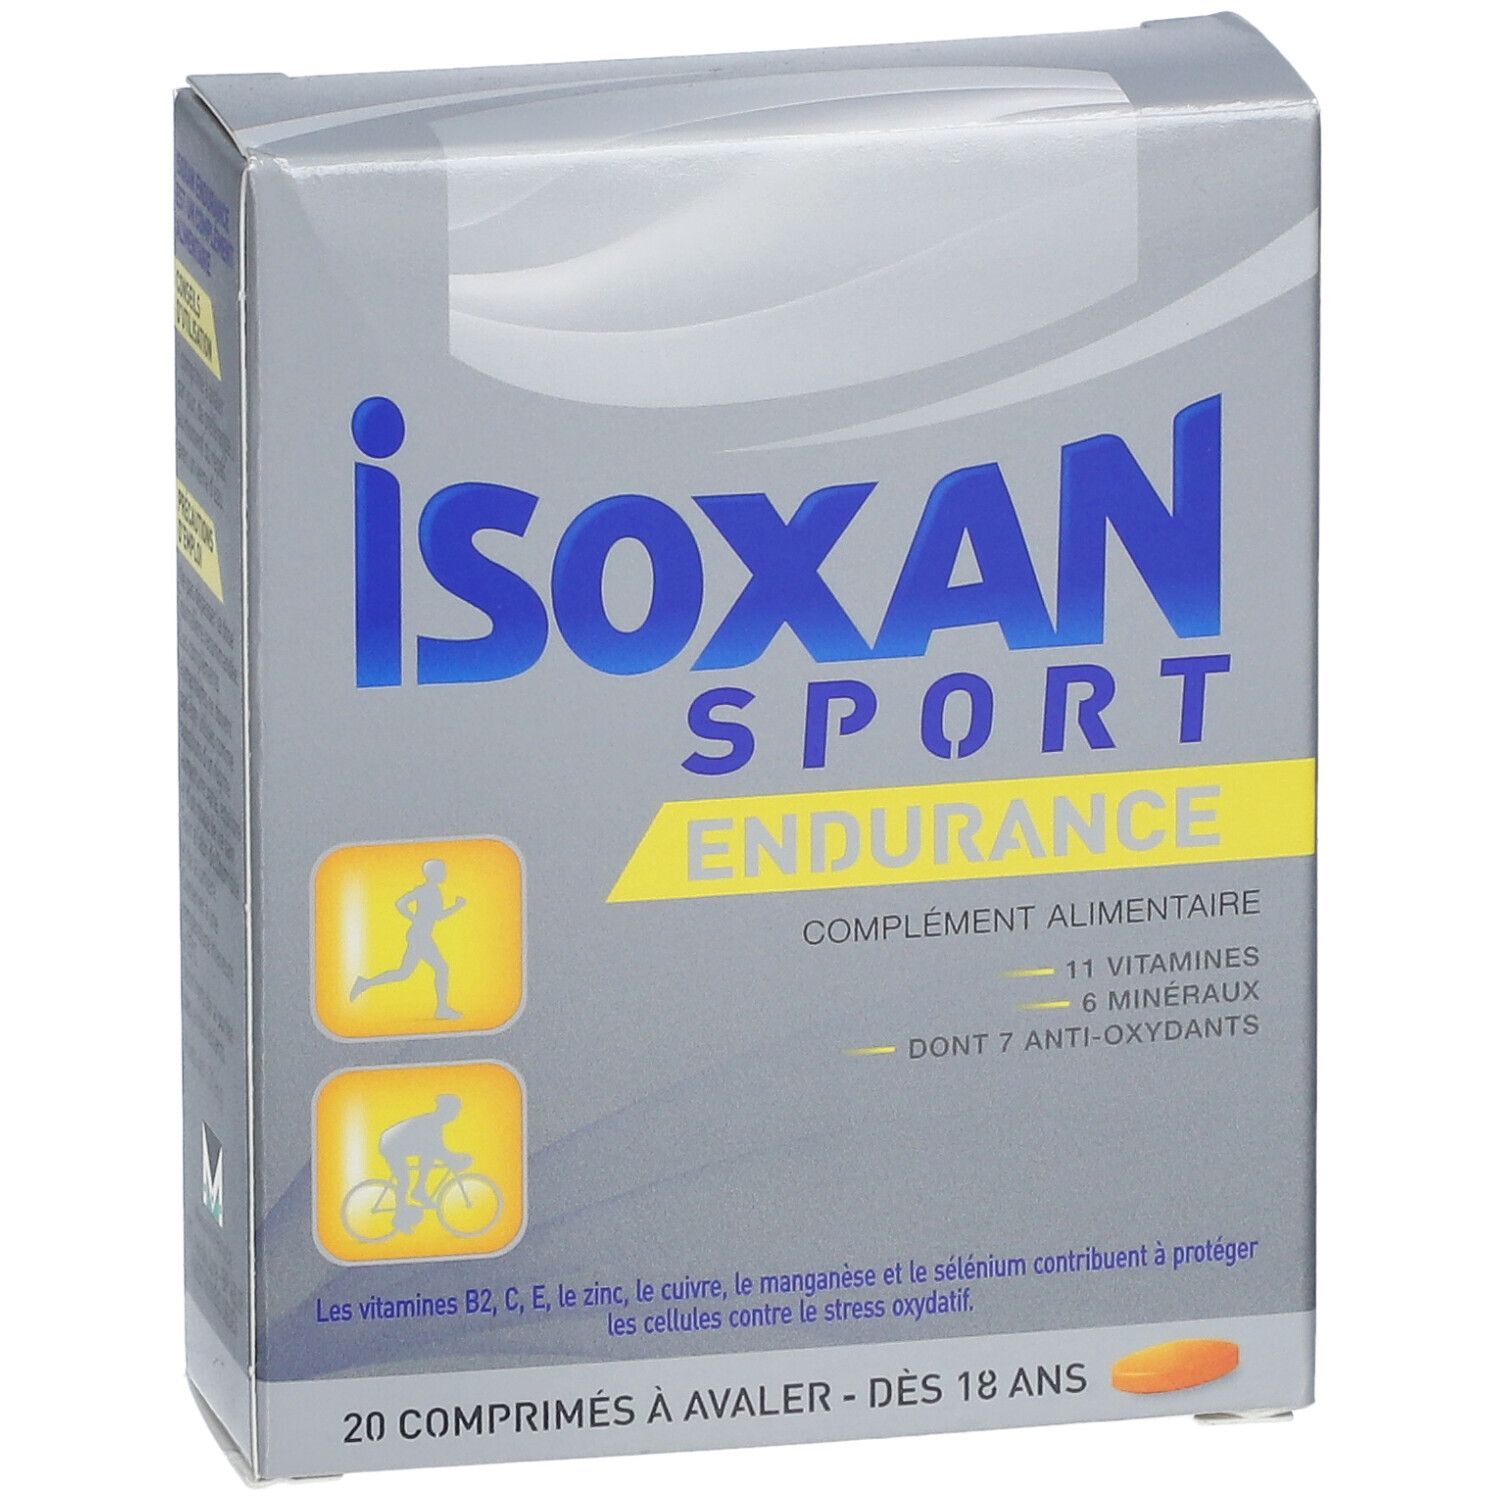 Isoxan endurance